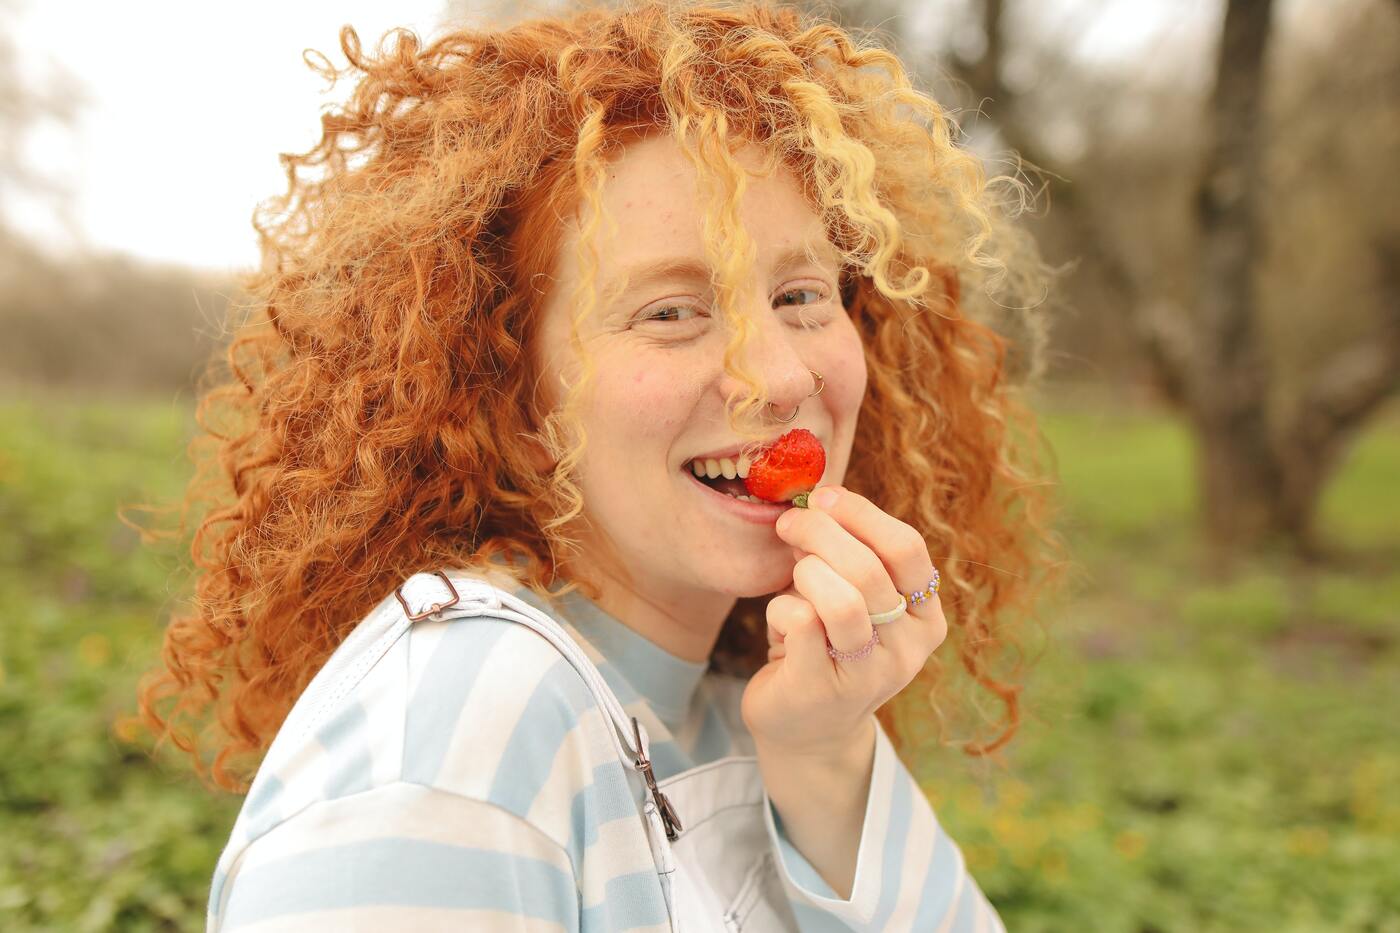 femme mange une fraise